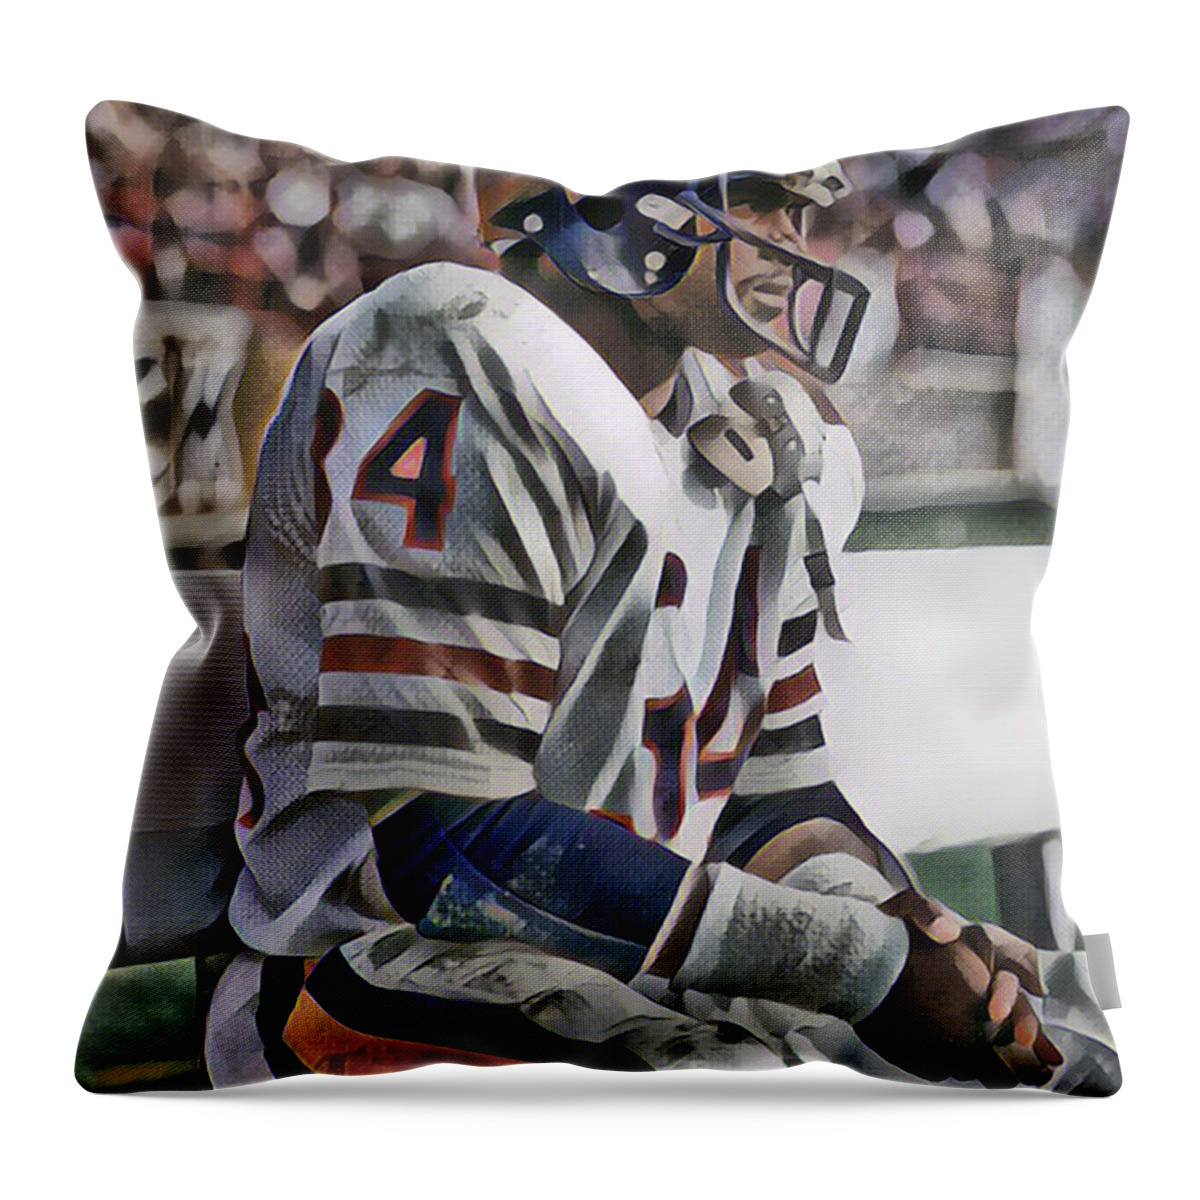 Walter Payton Throw Pillow featuring the mixed media Walter Payton Chicago Bears Art 2 by Joe Hamilton